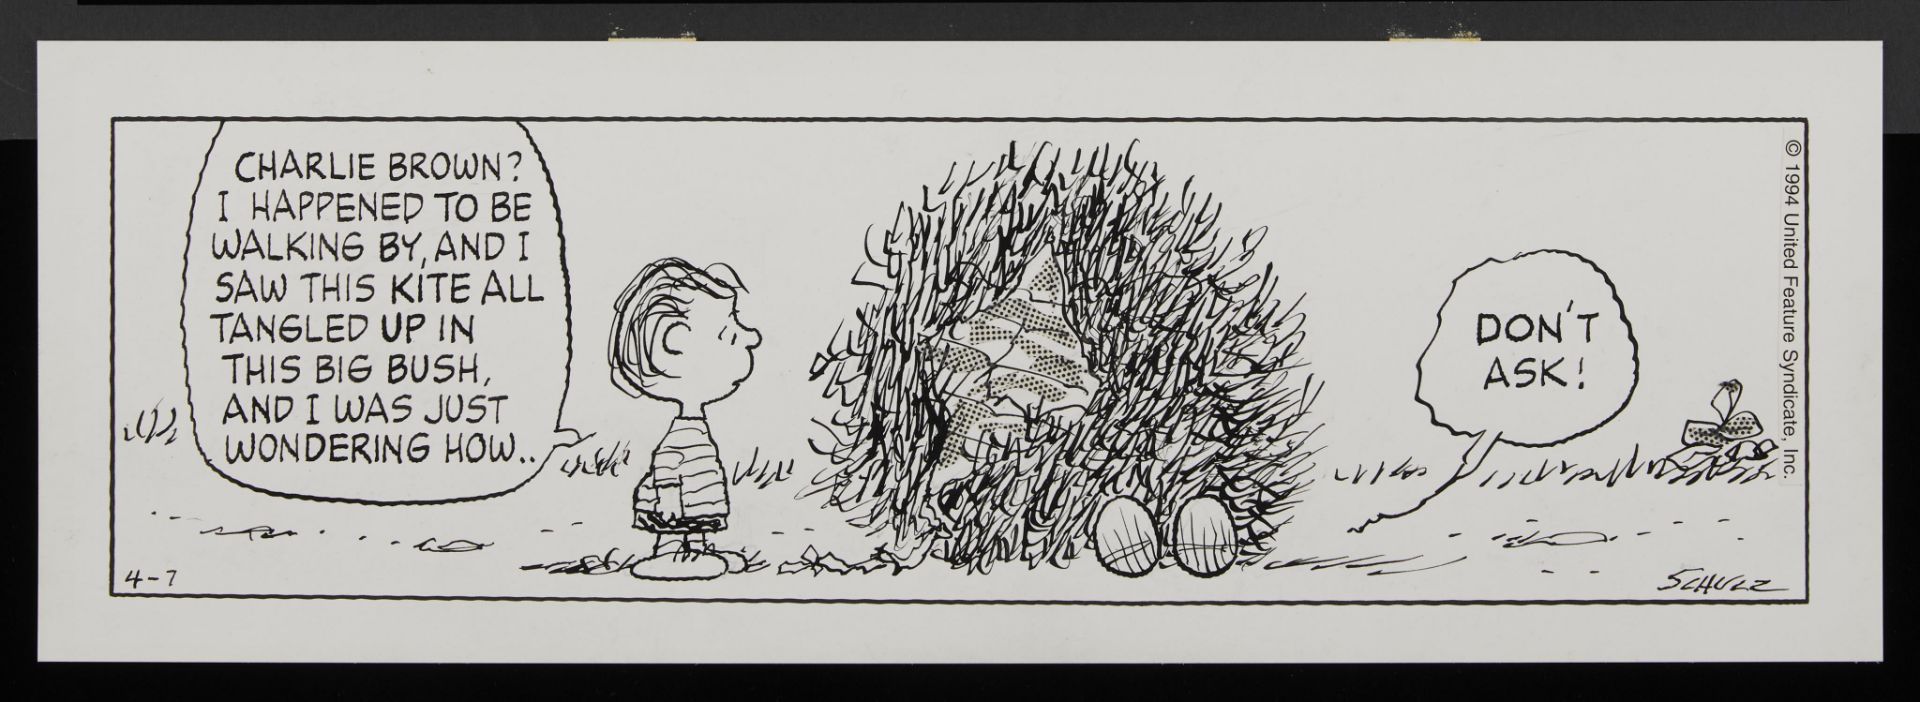 Charles Schulz Original Single Panel Peanuts Comic - Image 3 of 9